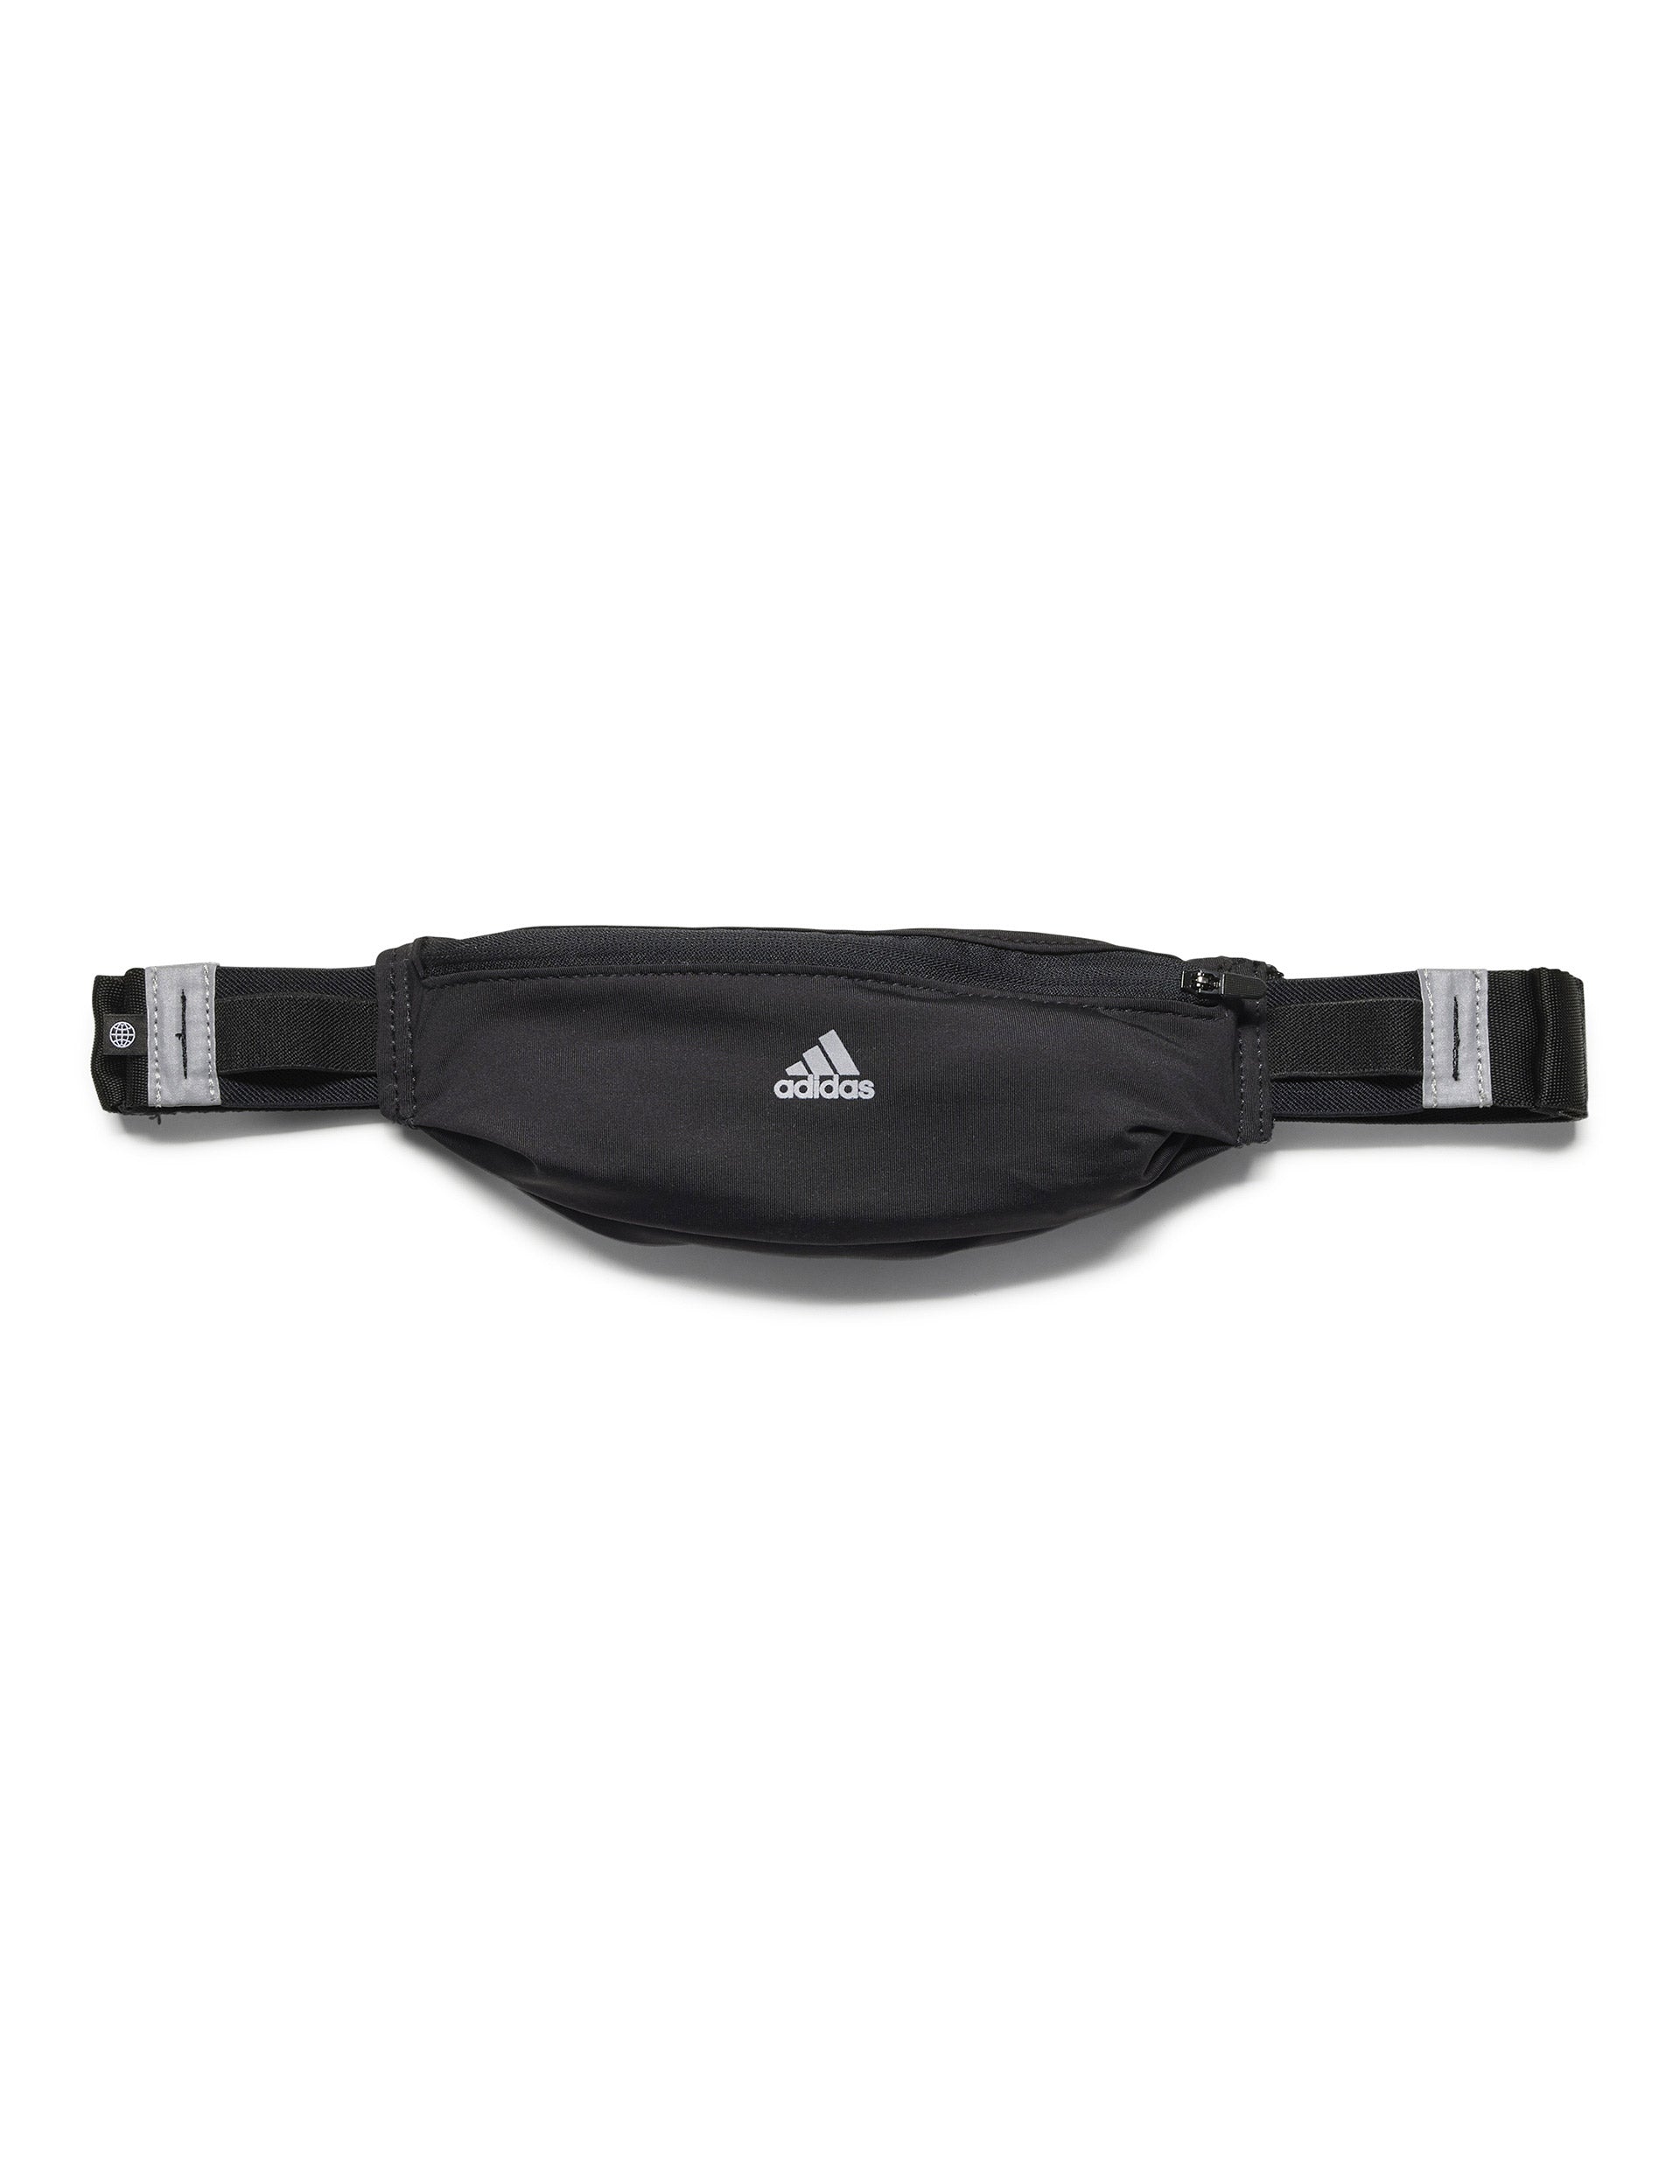 Adidas Running Belt - Black/Reflective Silverimages1- The Sports Edit